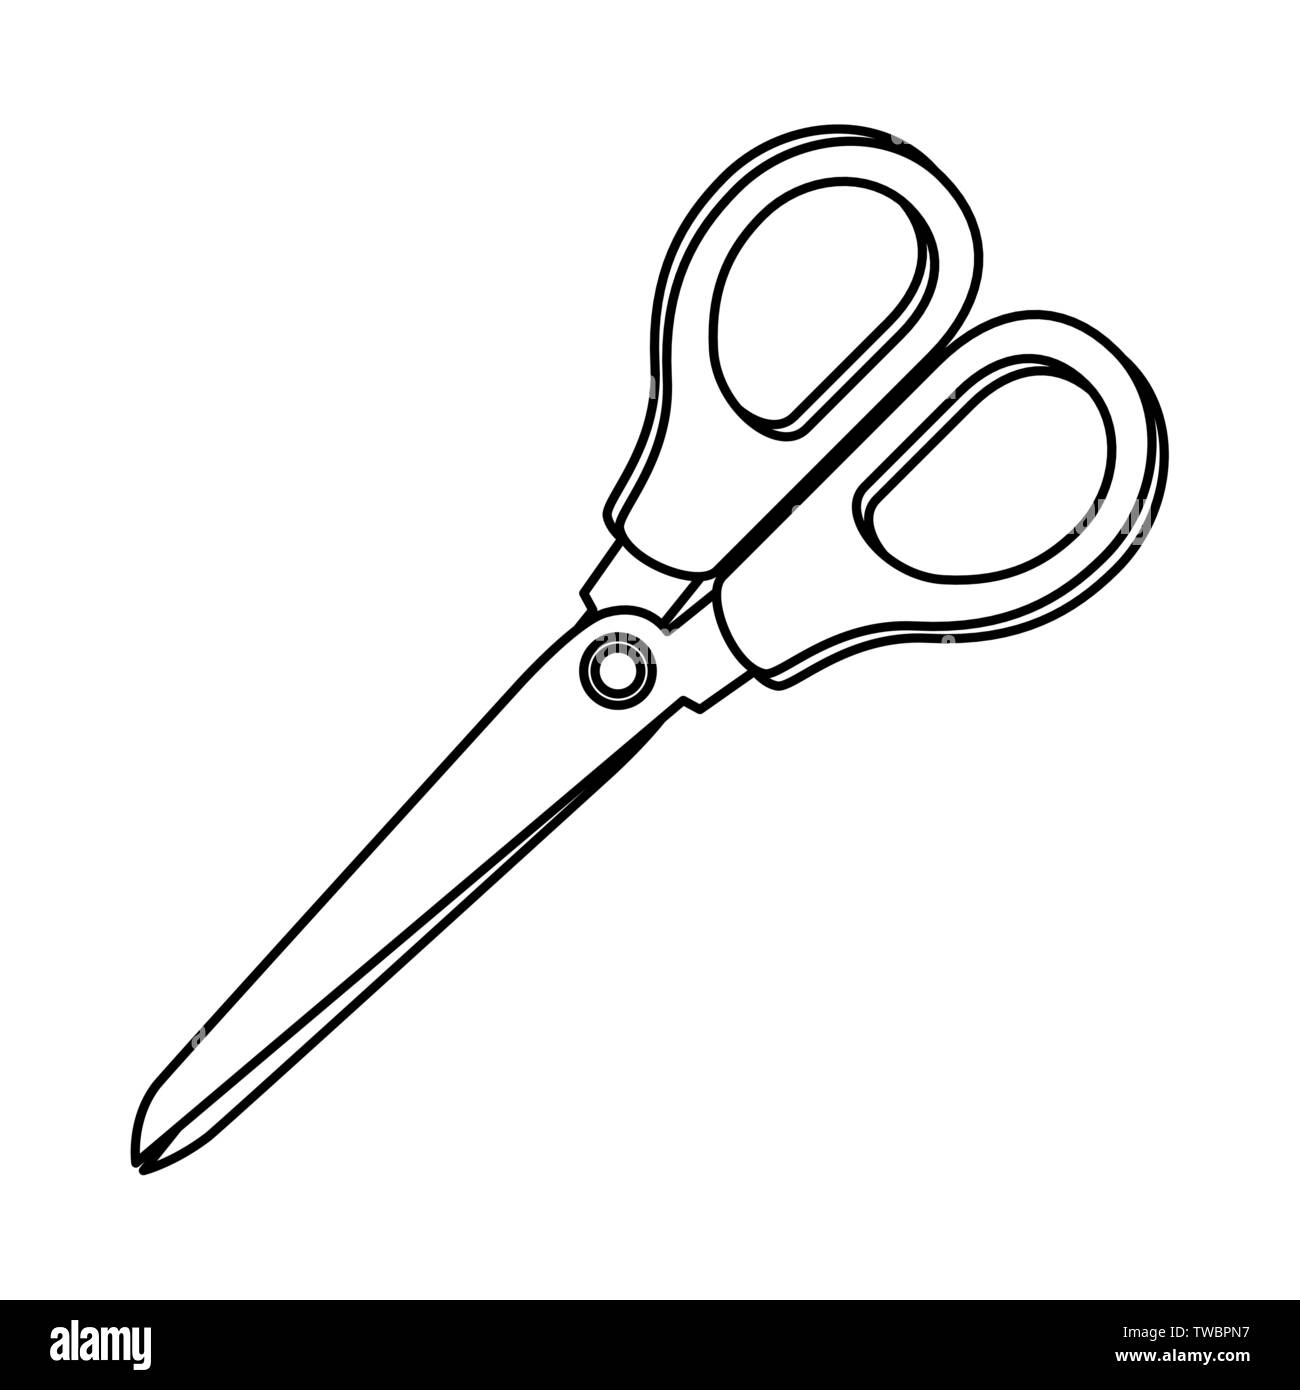 https://c8.alamy.com/comp/TWBPN7/scissors-cut-school-supply-icon-TWBPN7.jpg